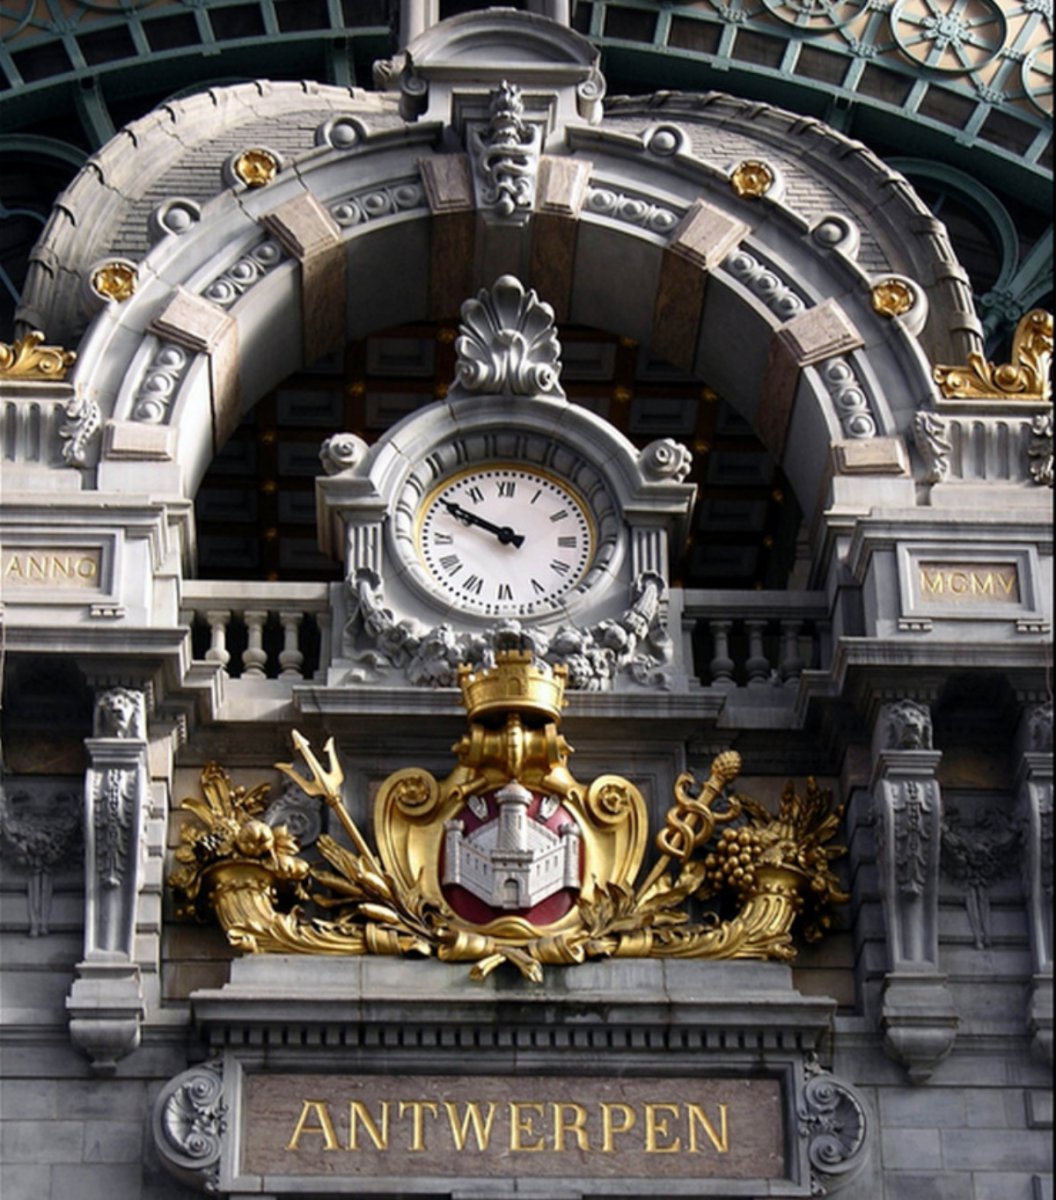 Antwerp Central Station clock